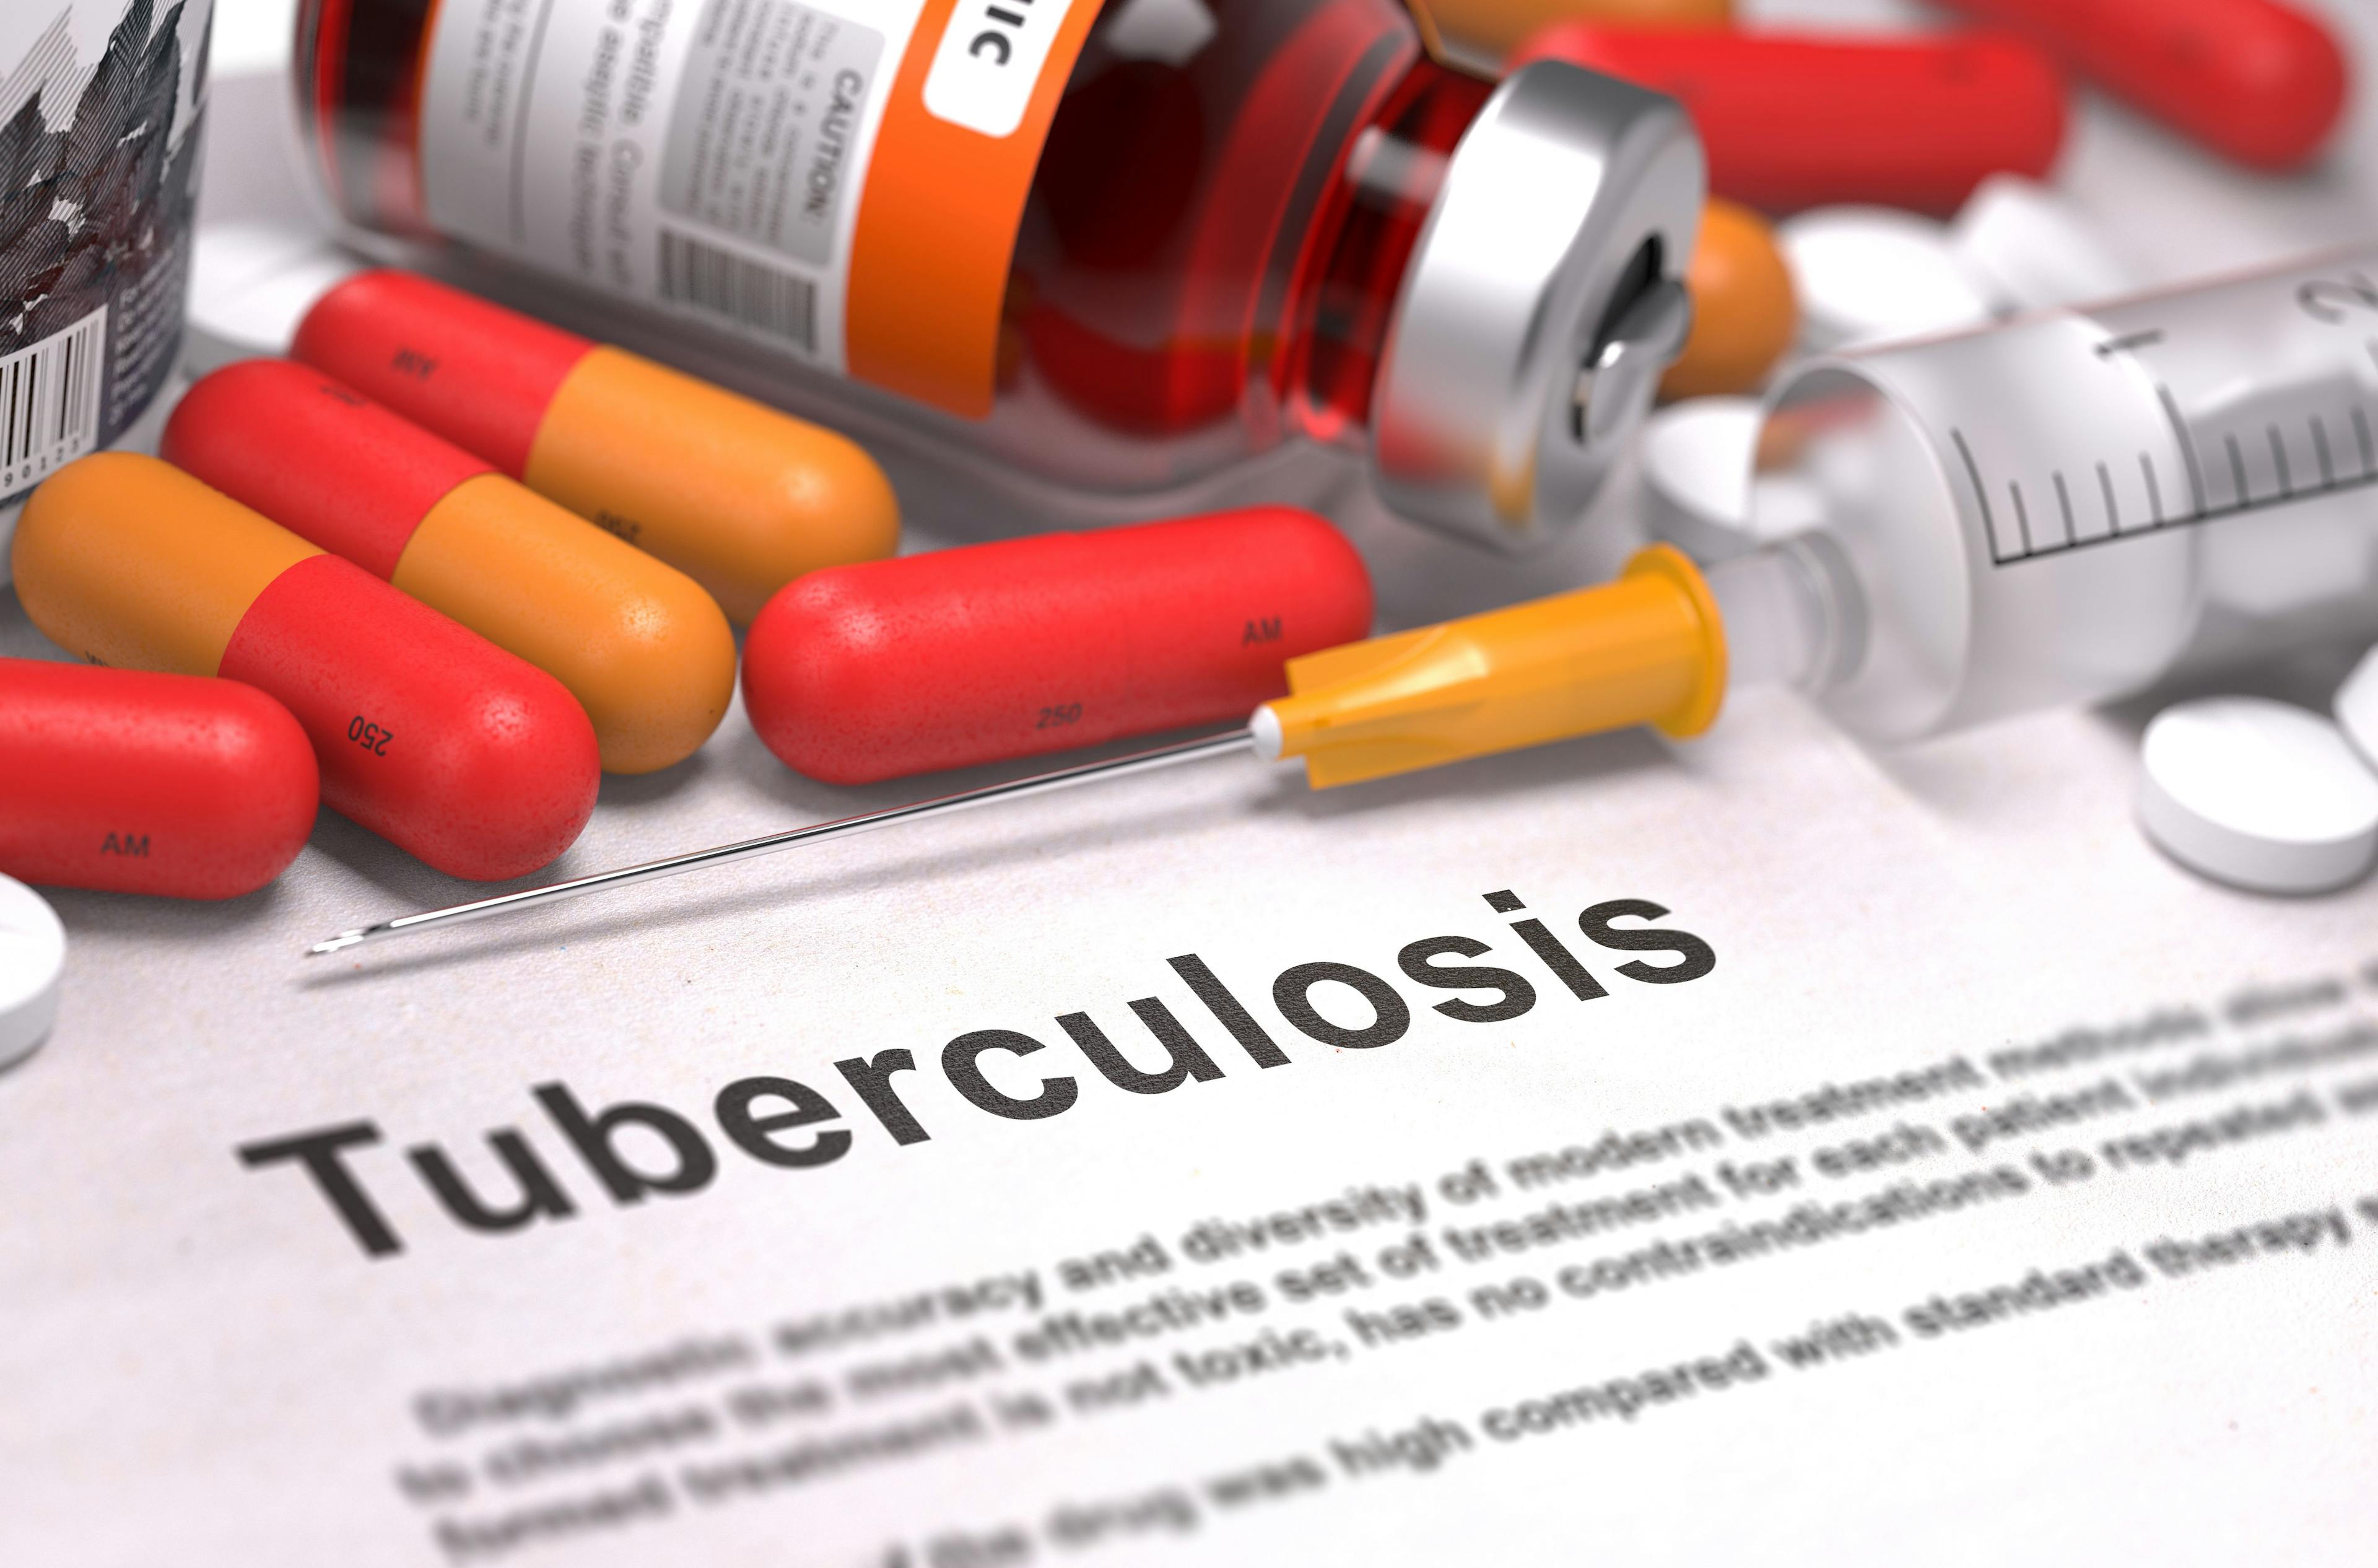 Diagnosis - Tuberculosis. Medical Concept. | Image credit: tashatuvango - stock.adobe.com